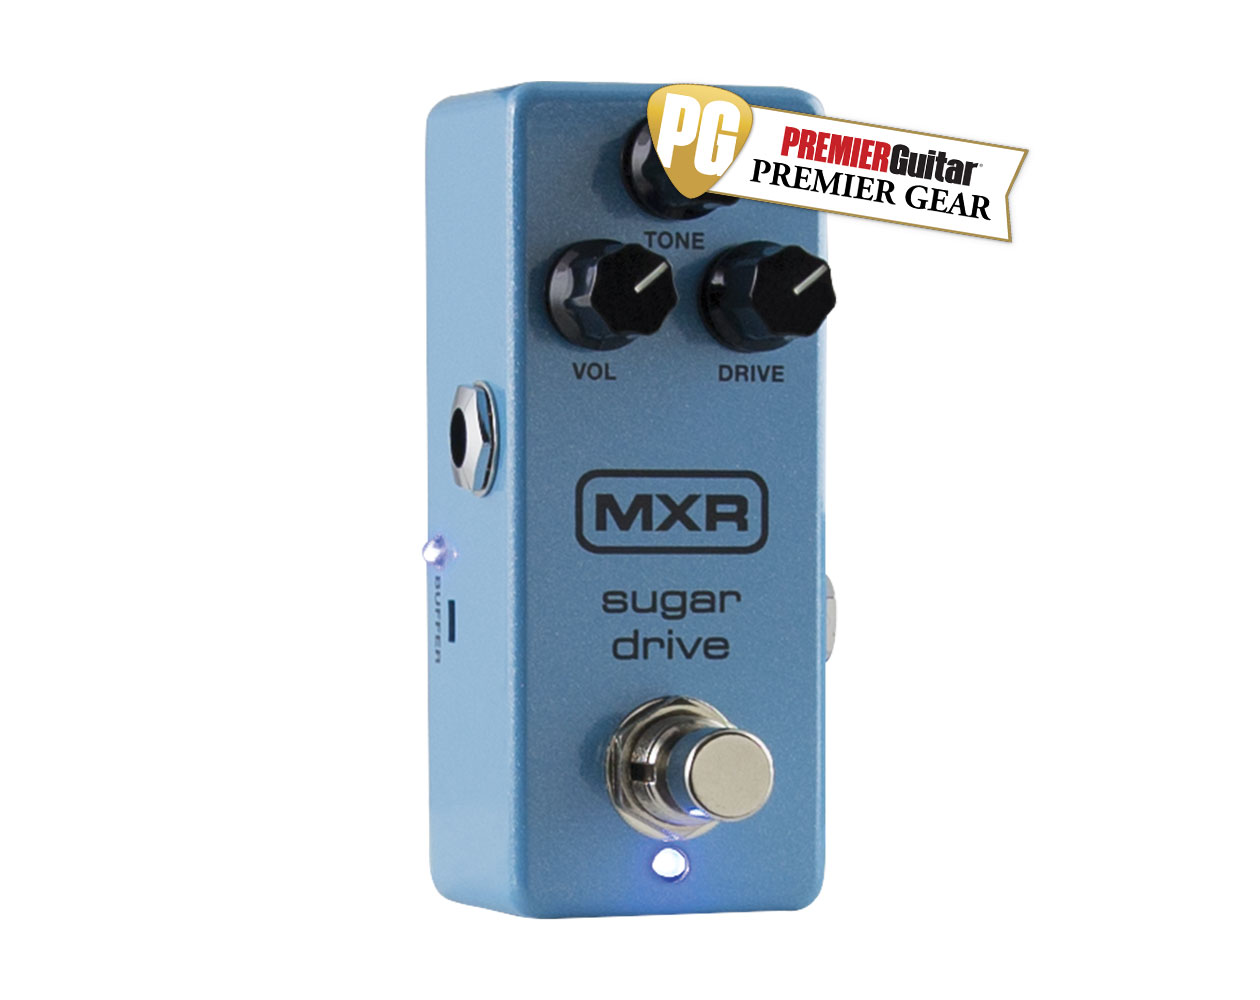 MXR Sugar Drive Review - Premier Guitar